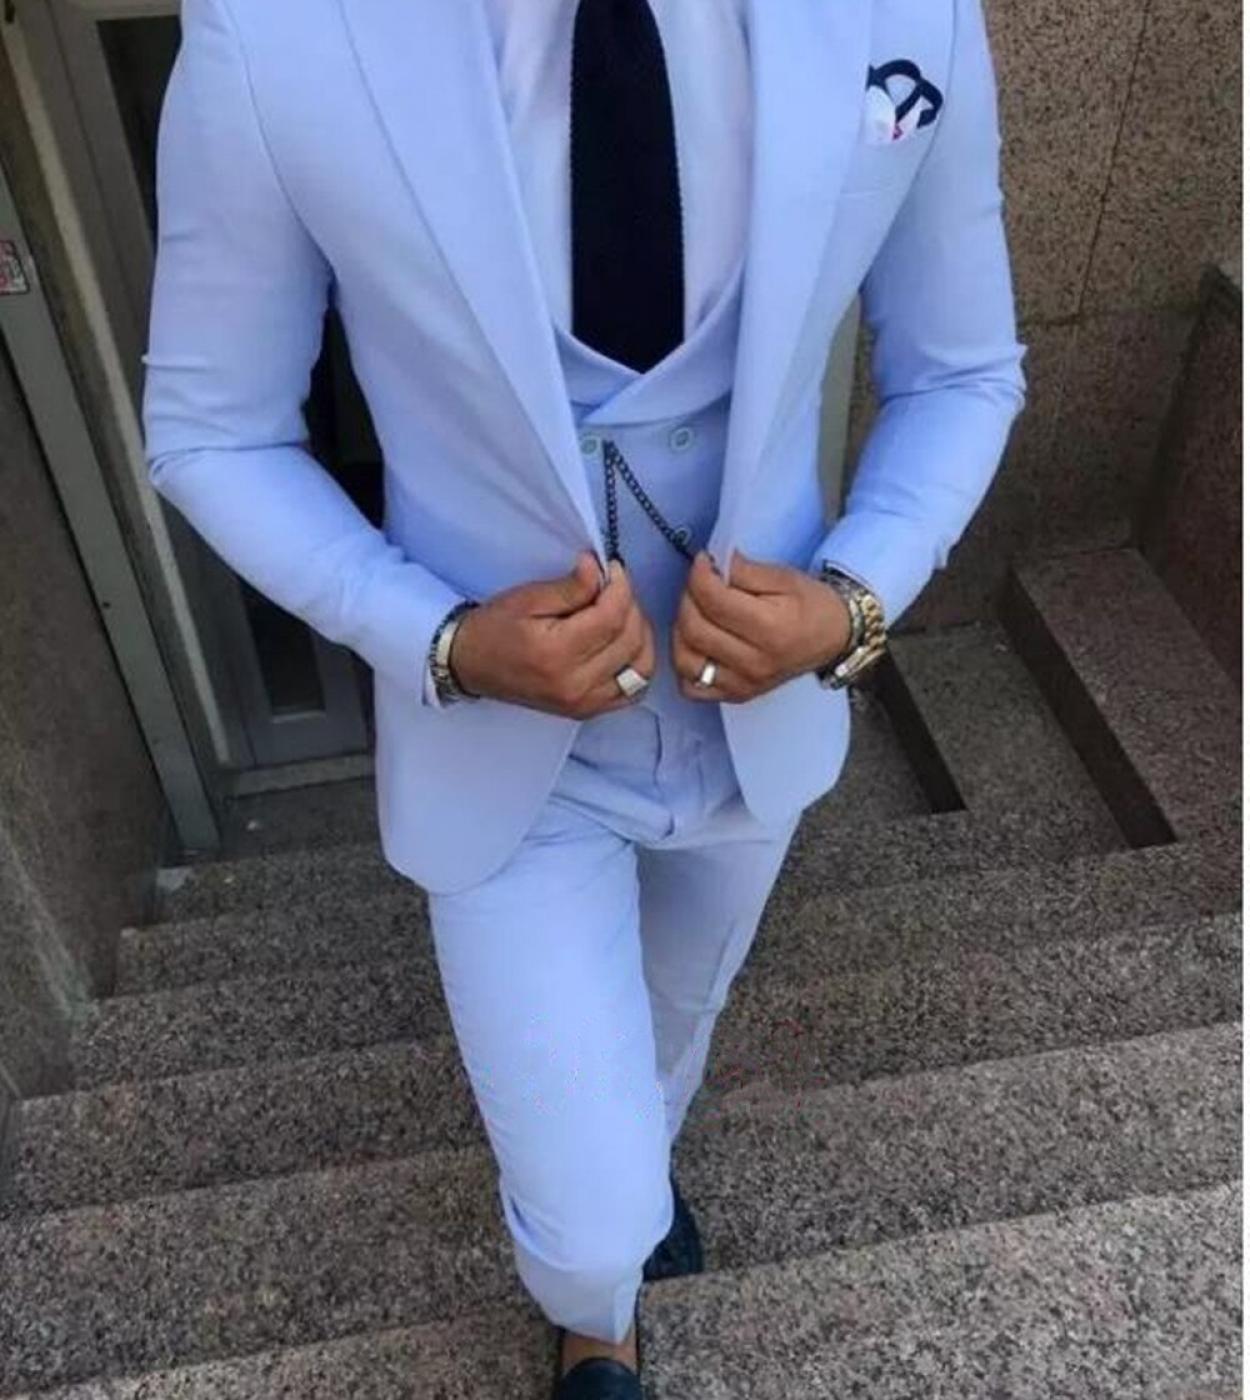 Fashion Light Blue Men Suits 3 Pcs Costume Homme Peak Lapel Groom Wedding Tuxedo Prom Party Slim Fit Men Blazer Terno Ma